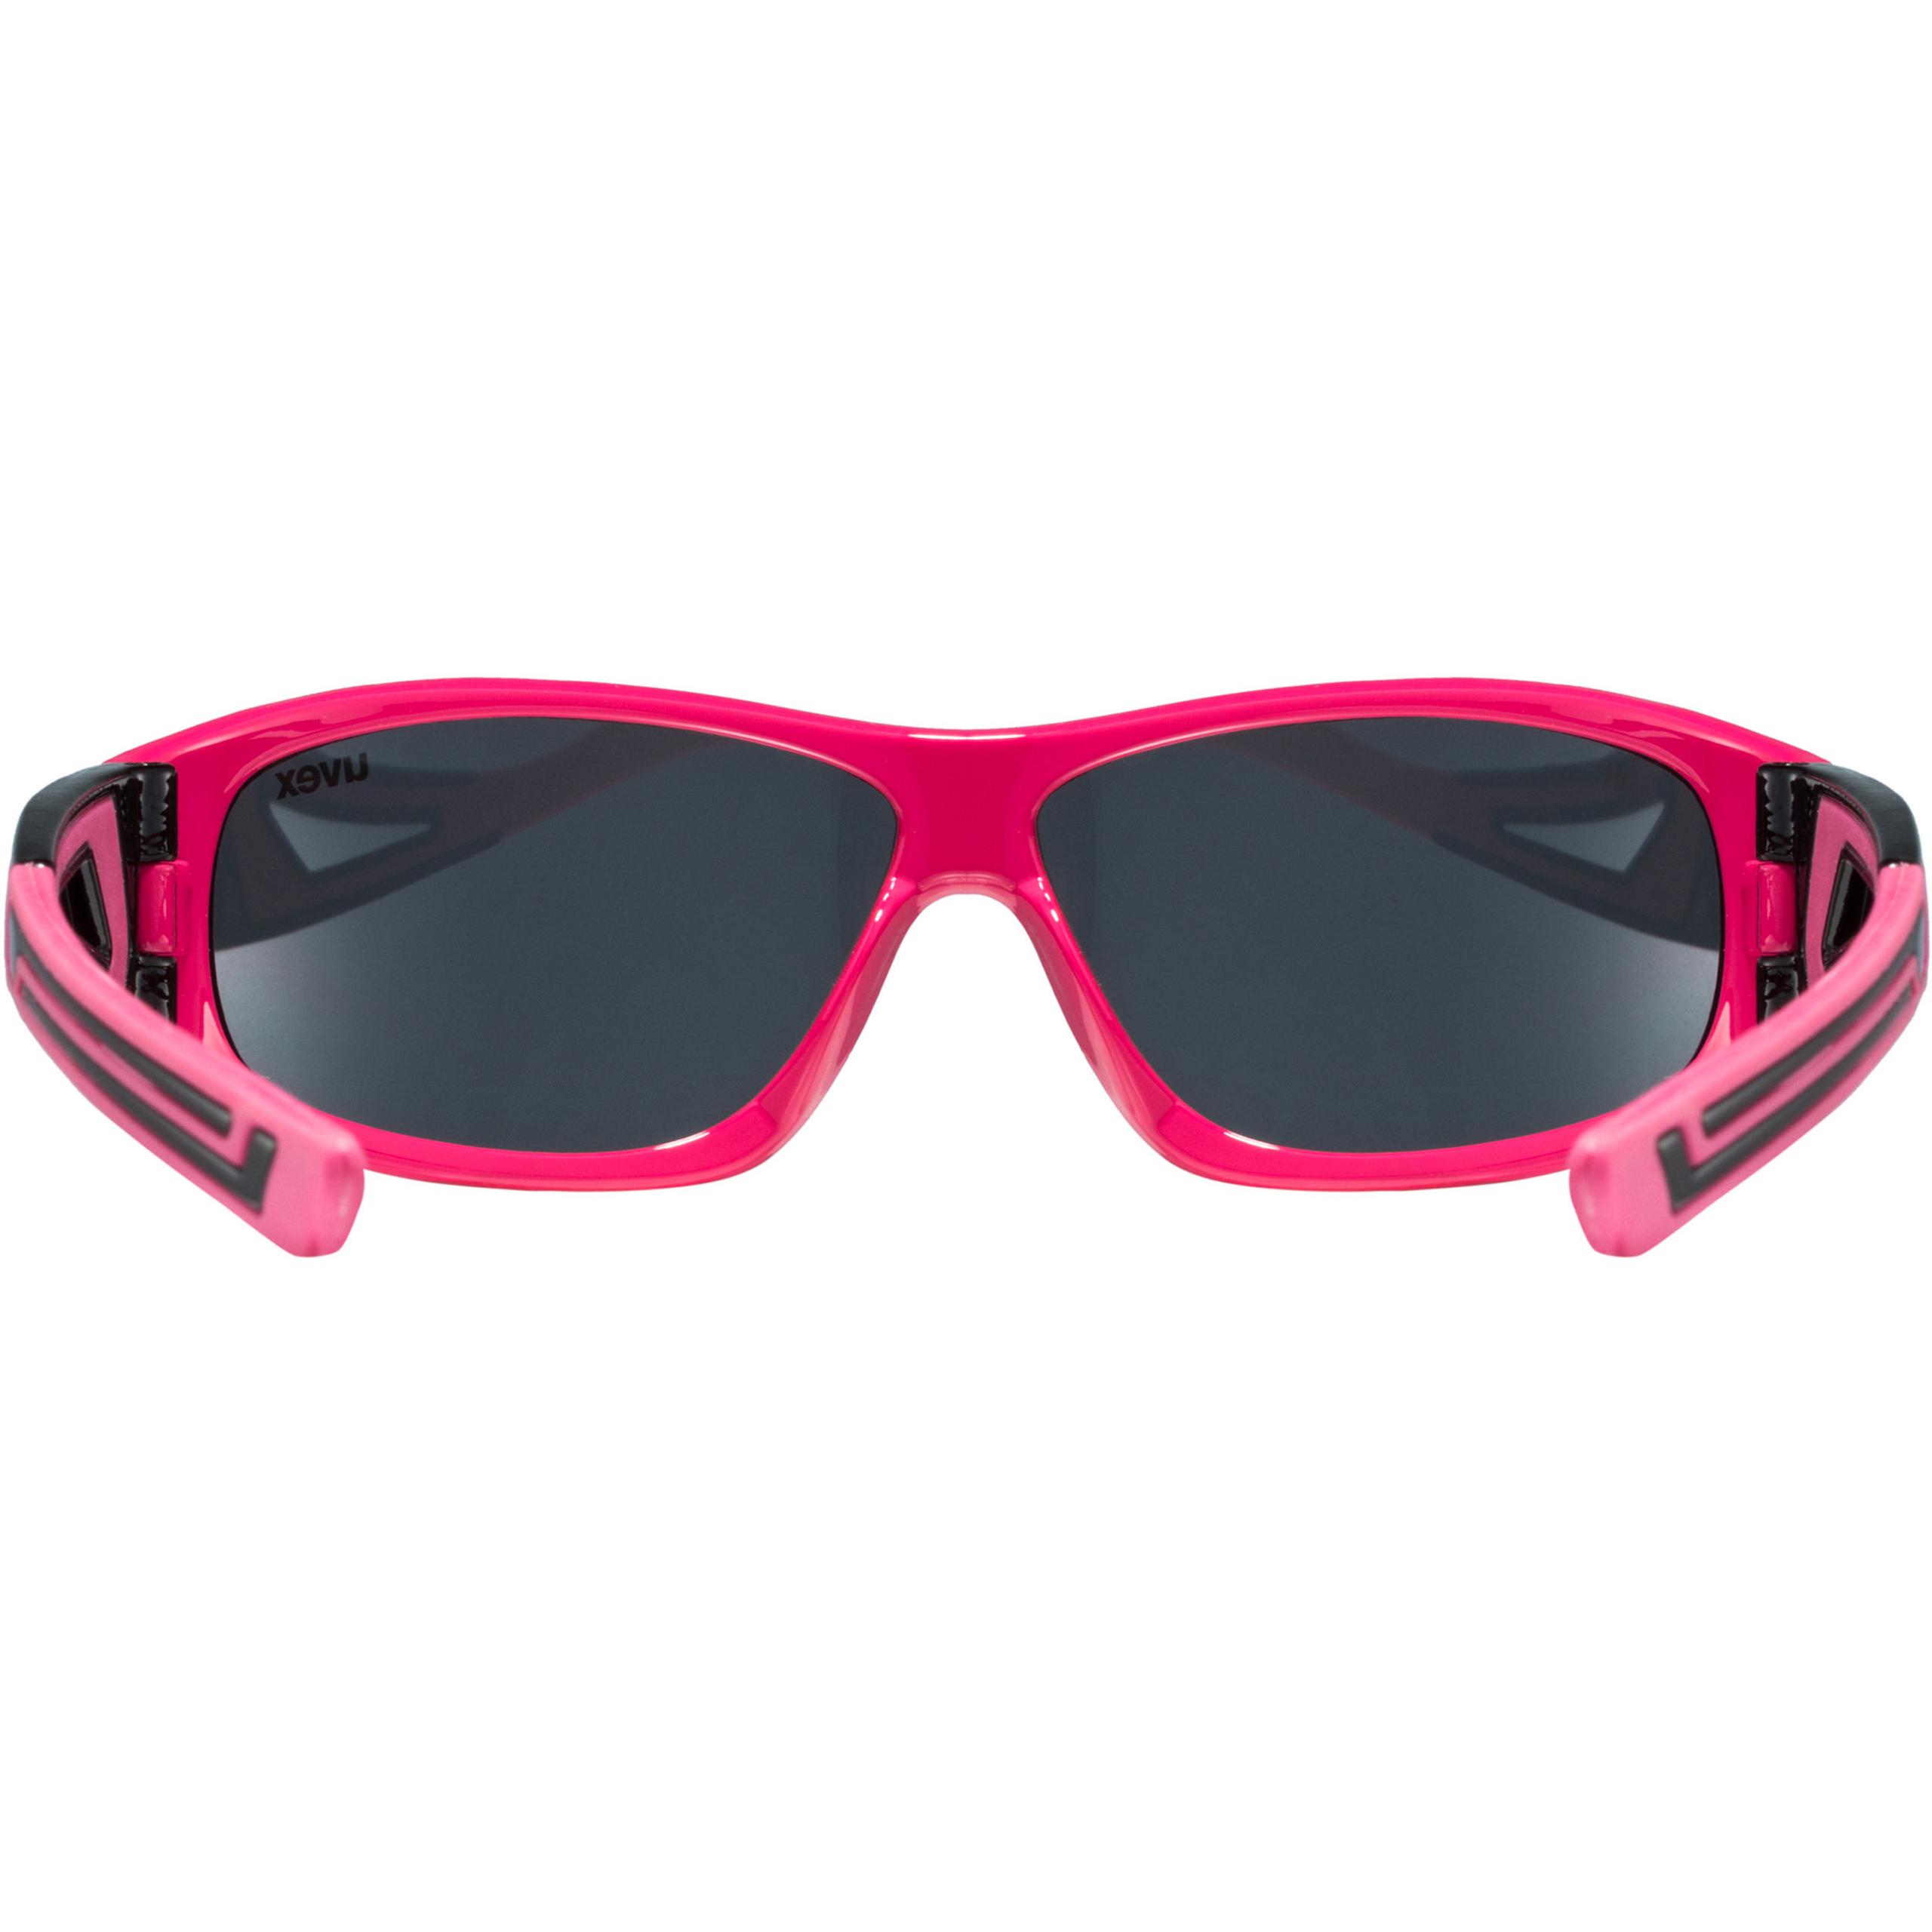 UVEX Sport style 509 bicicleta para niños/sport gafas Pink